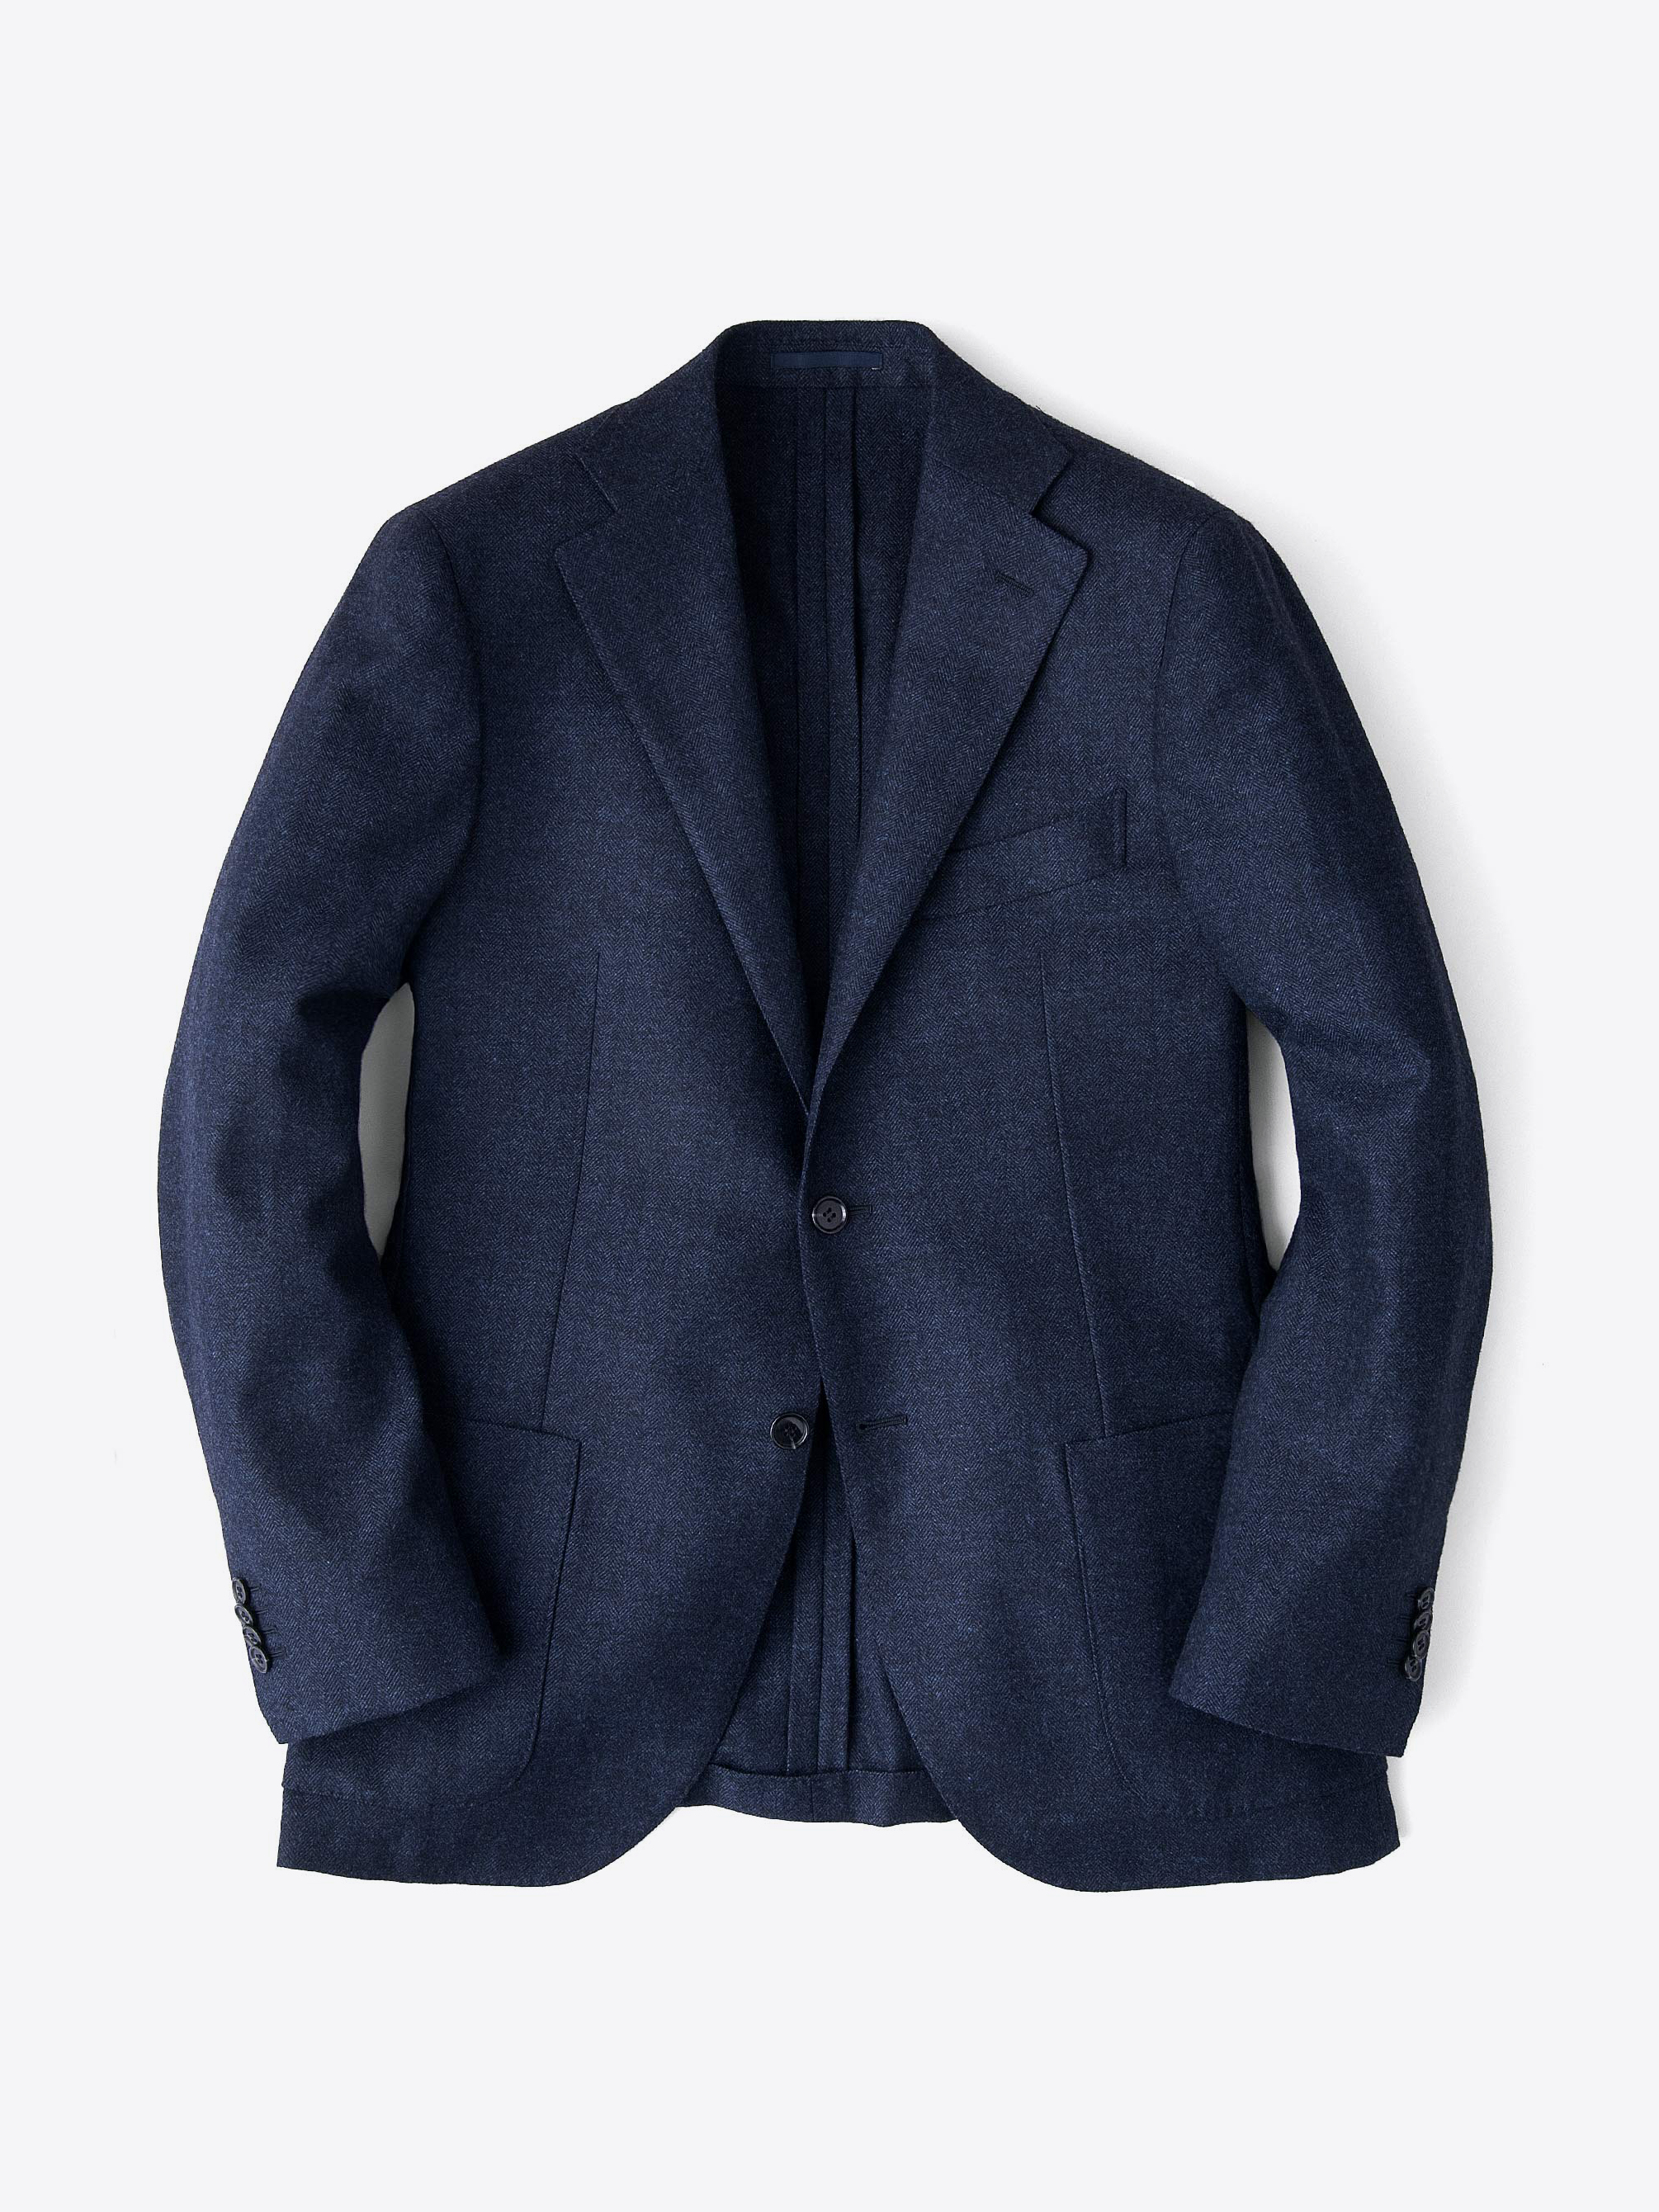 Zoom Image of Navy Wool Cashmere Herringbone Hudson Jacket